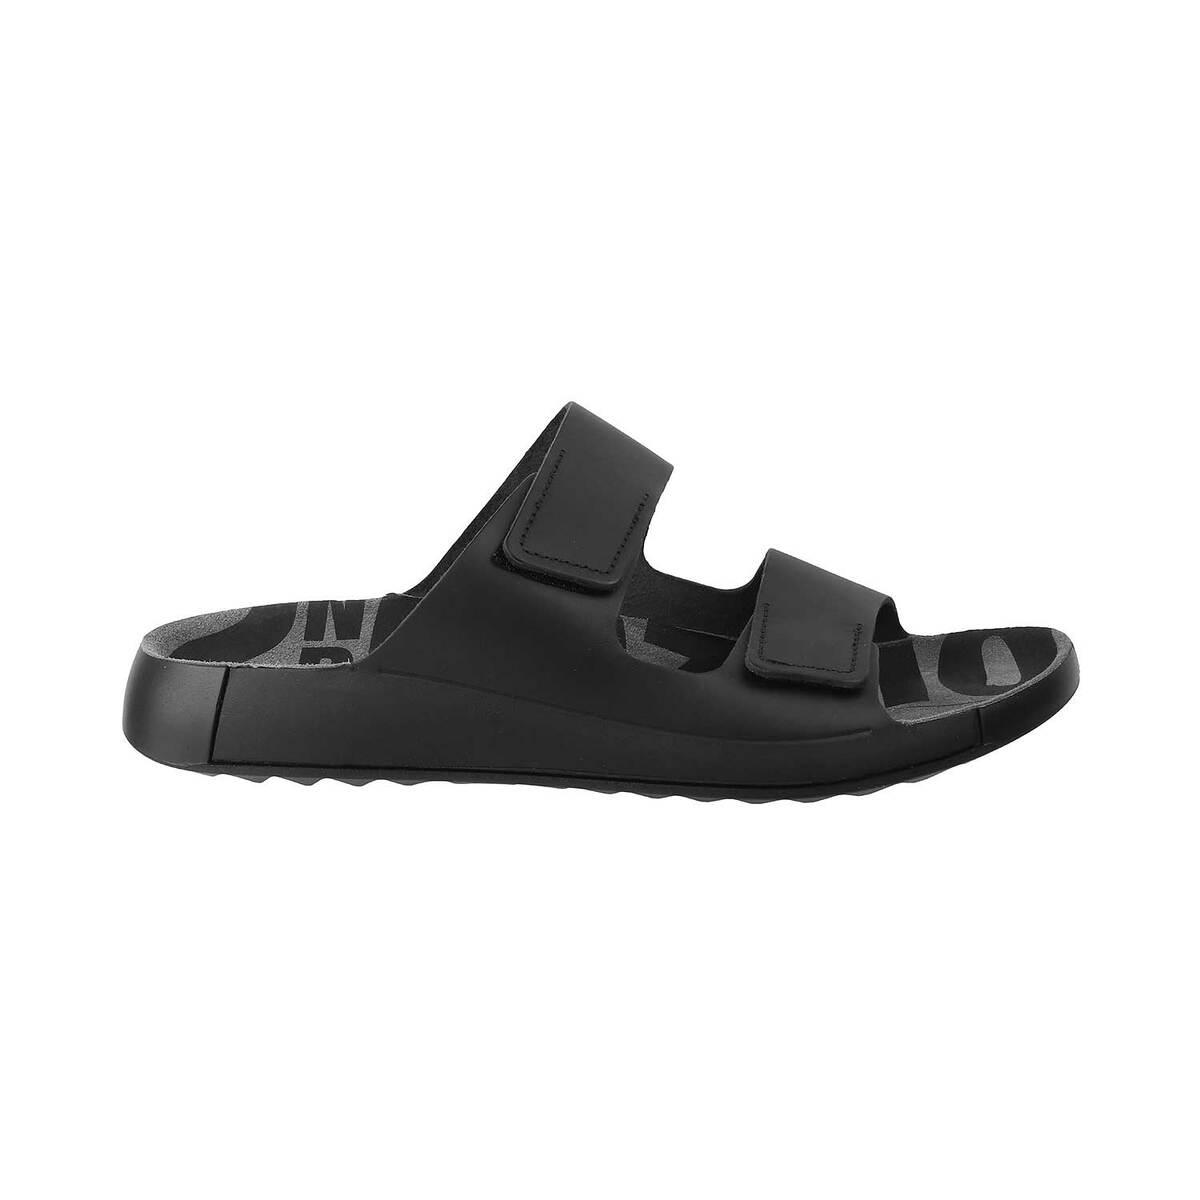 ecco Black Slippers Online | SKU:339-500904-11-43 - Metro Shoes